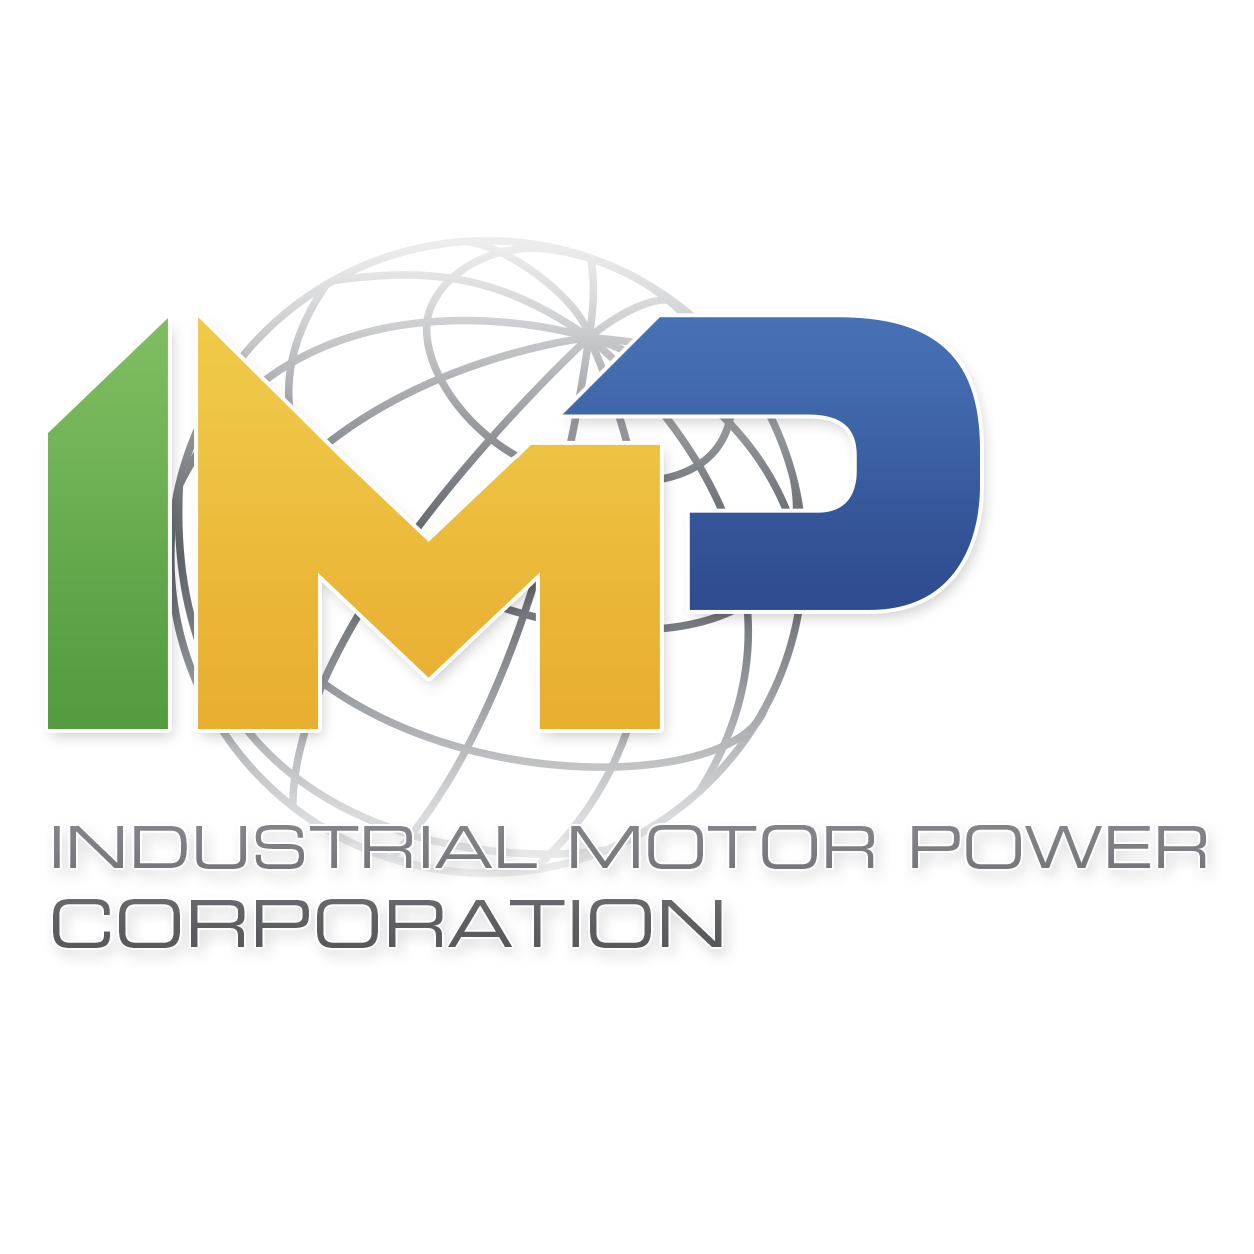 Industrial Motor Power